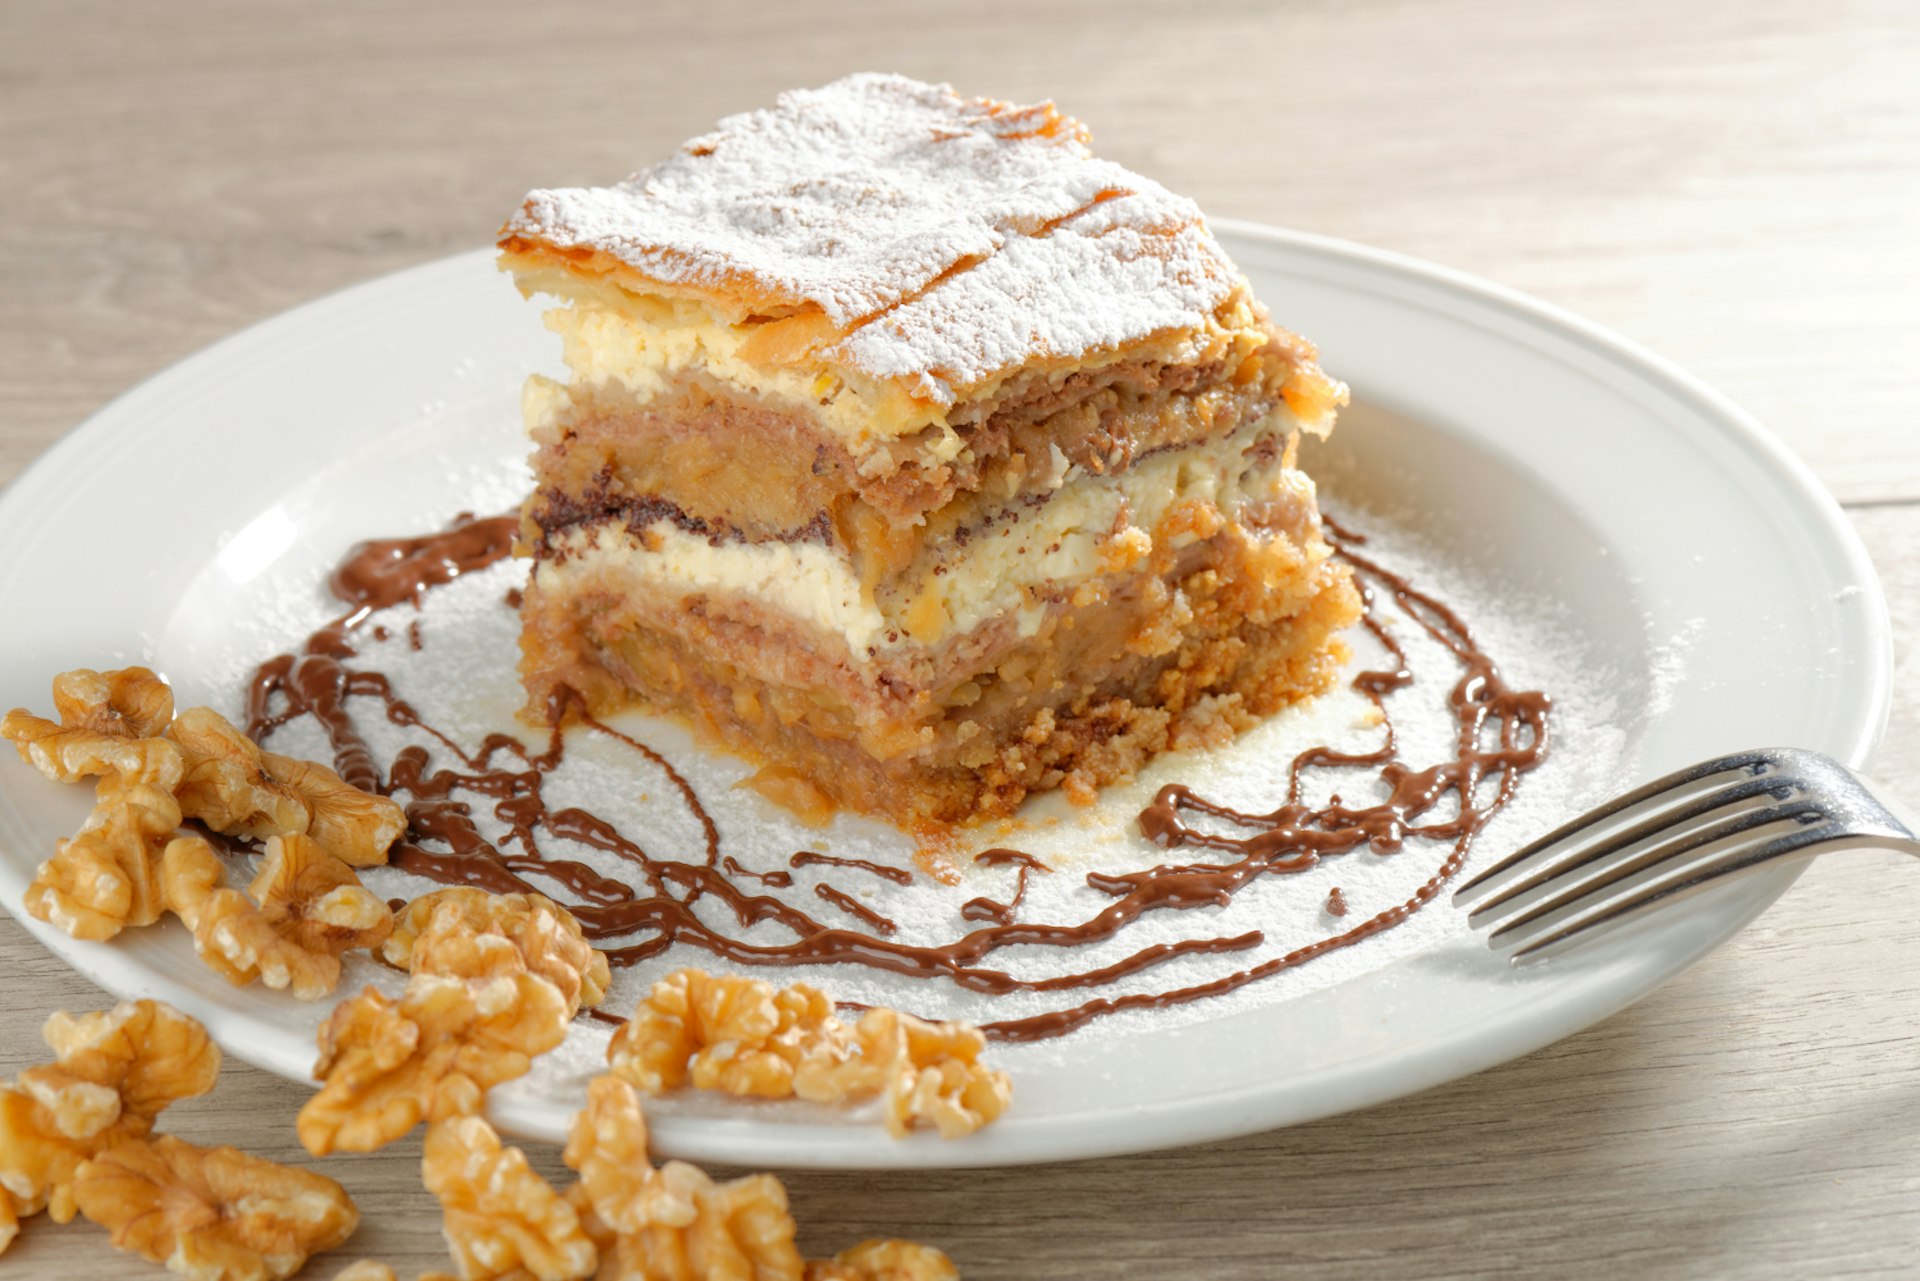 Traditional Slovenian gibanica dessert